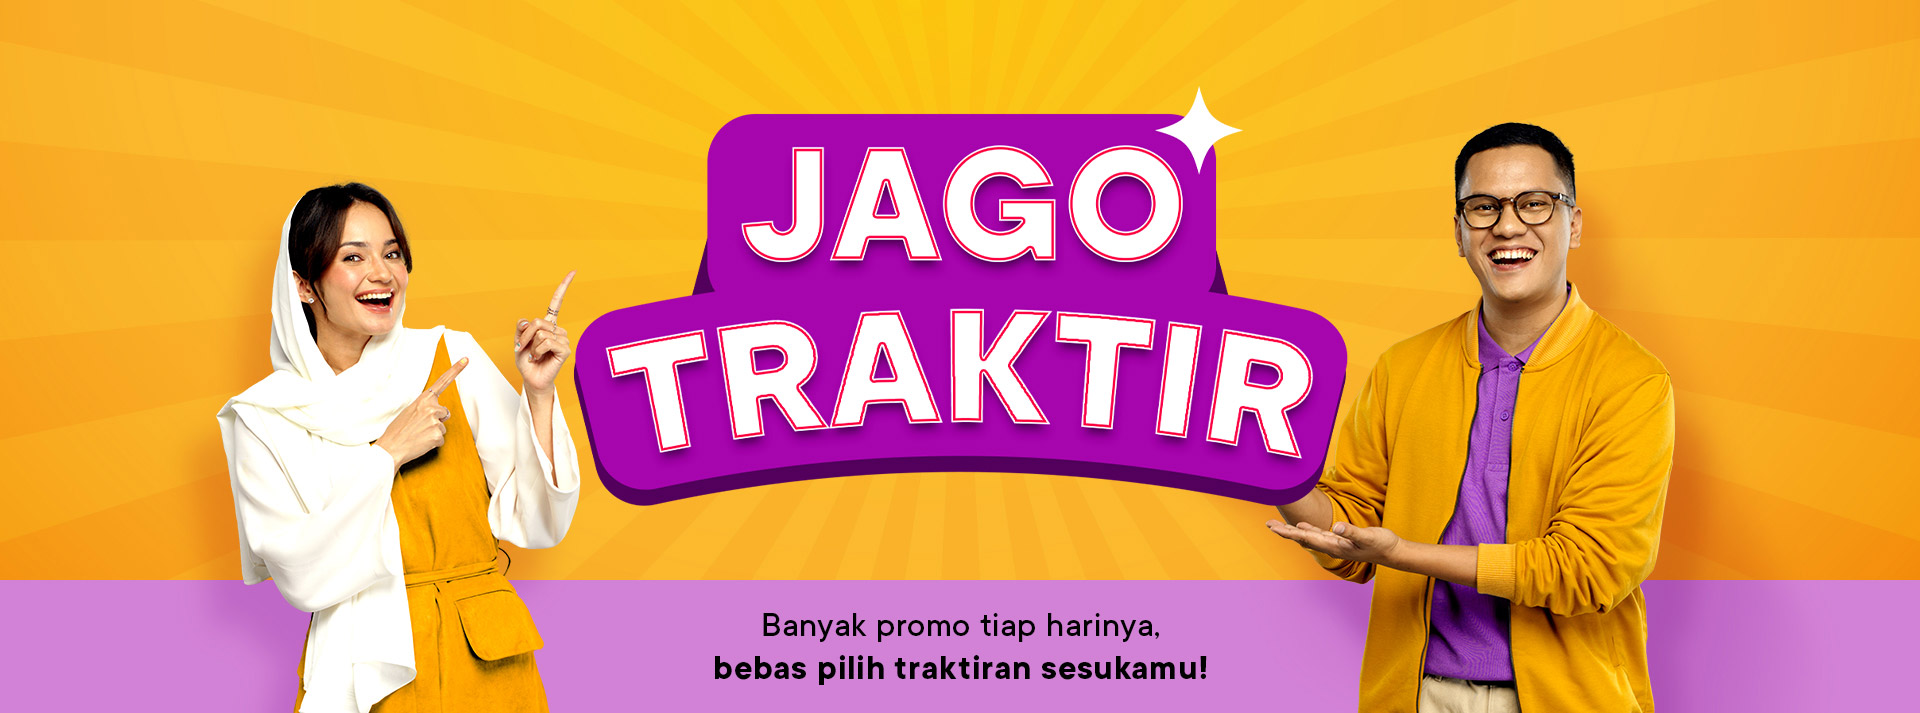 Promo Jago Traktir